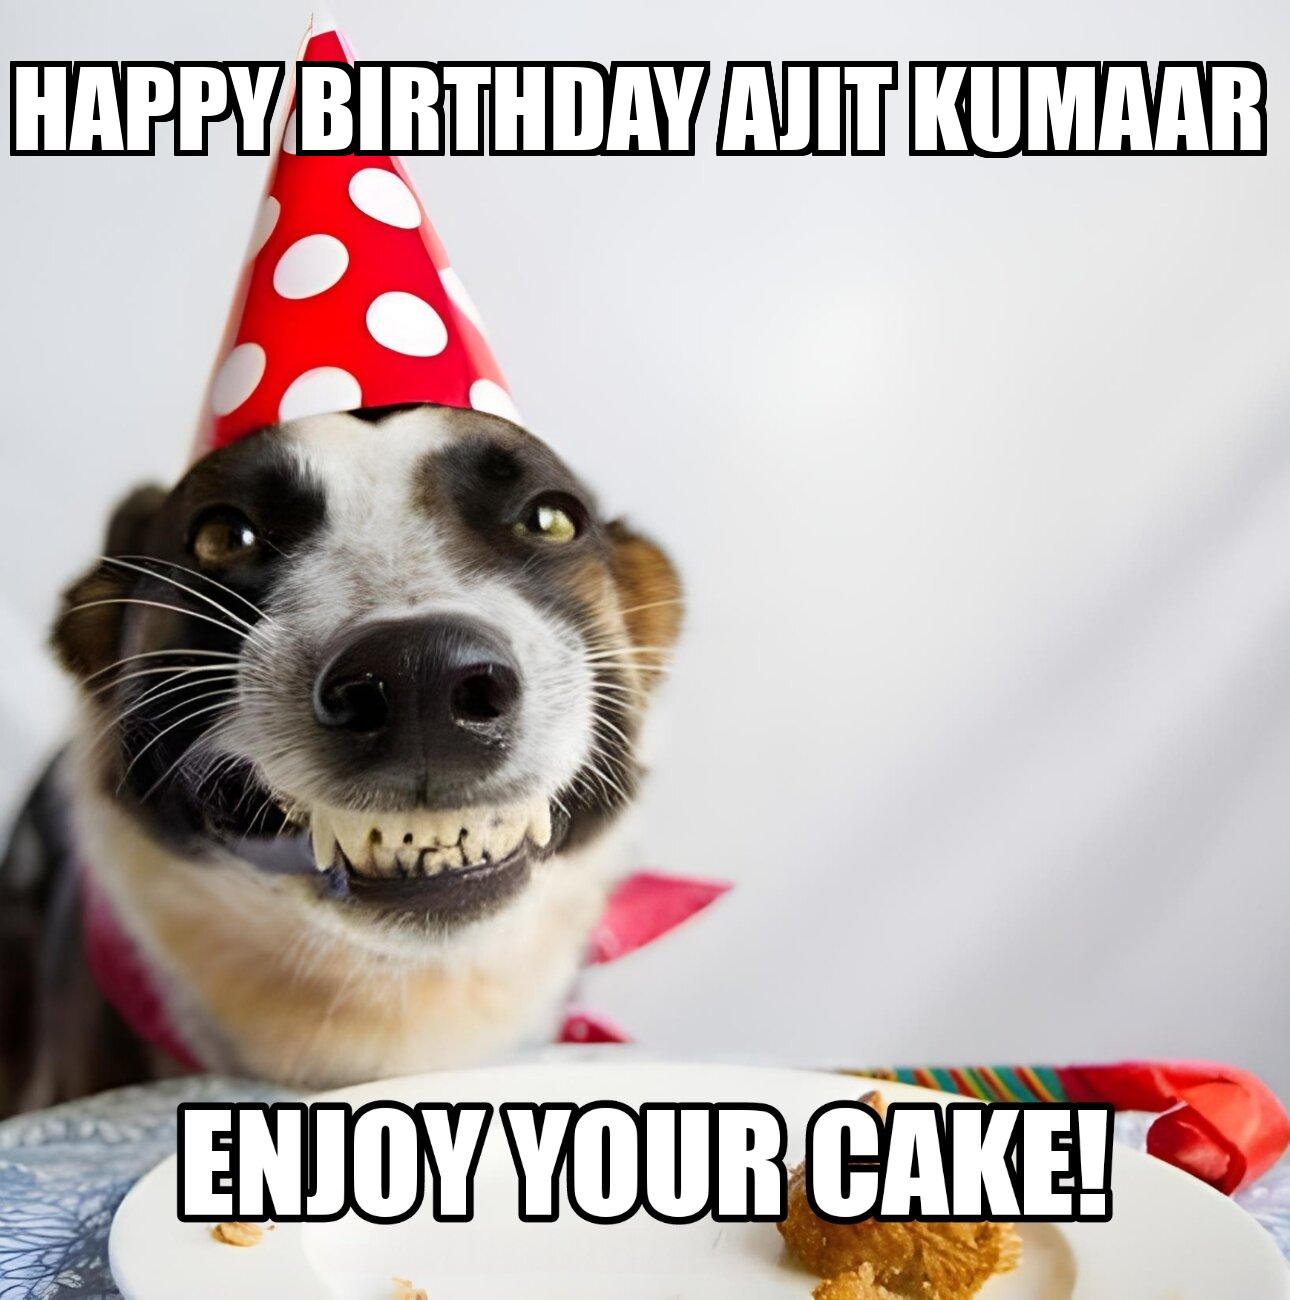 Happy Birthday Ajit Kumaar Enjoy Your Cake Dog Meme